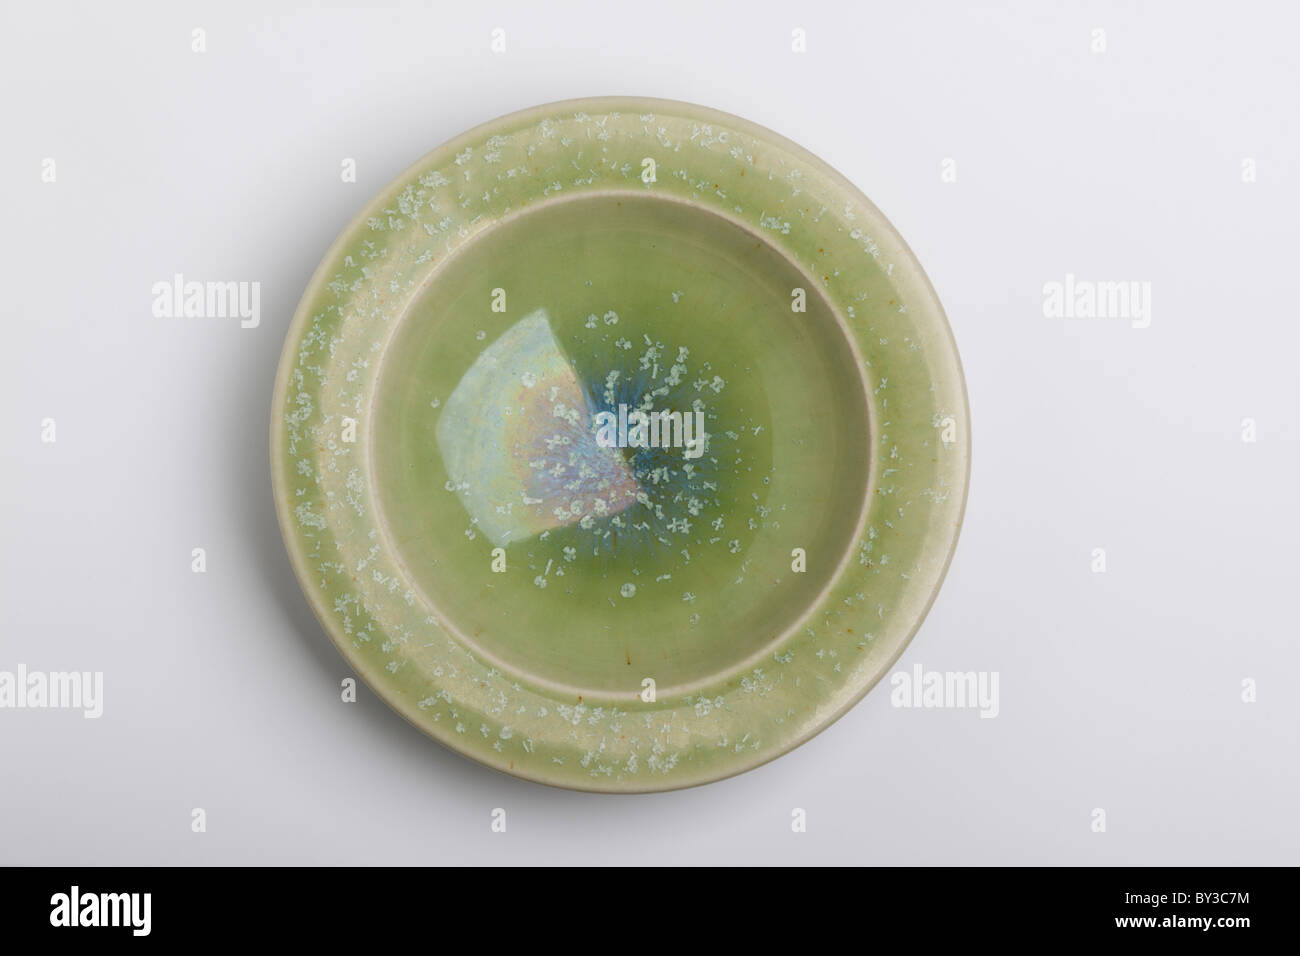 Studio dish or bowl made by Palshus, Denmark, with crystalline glaze Stock Photo